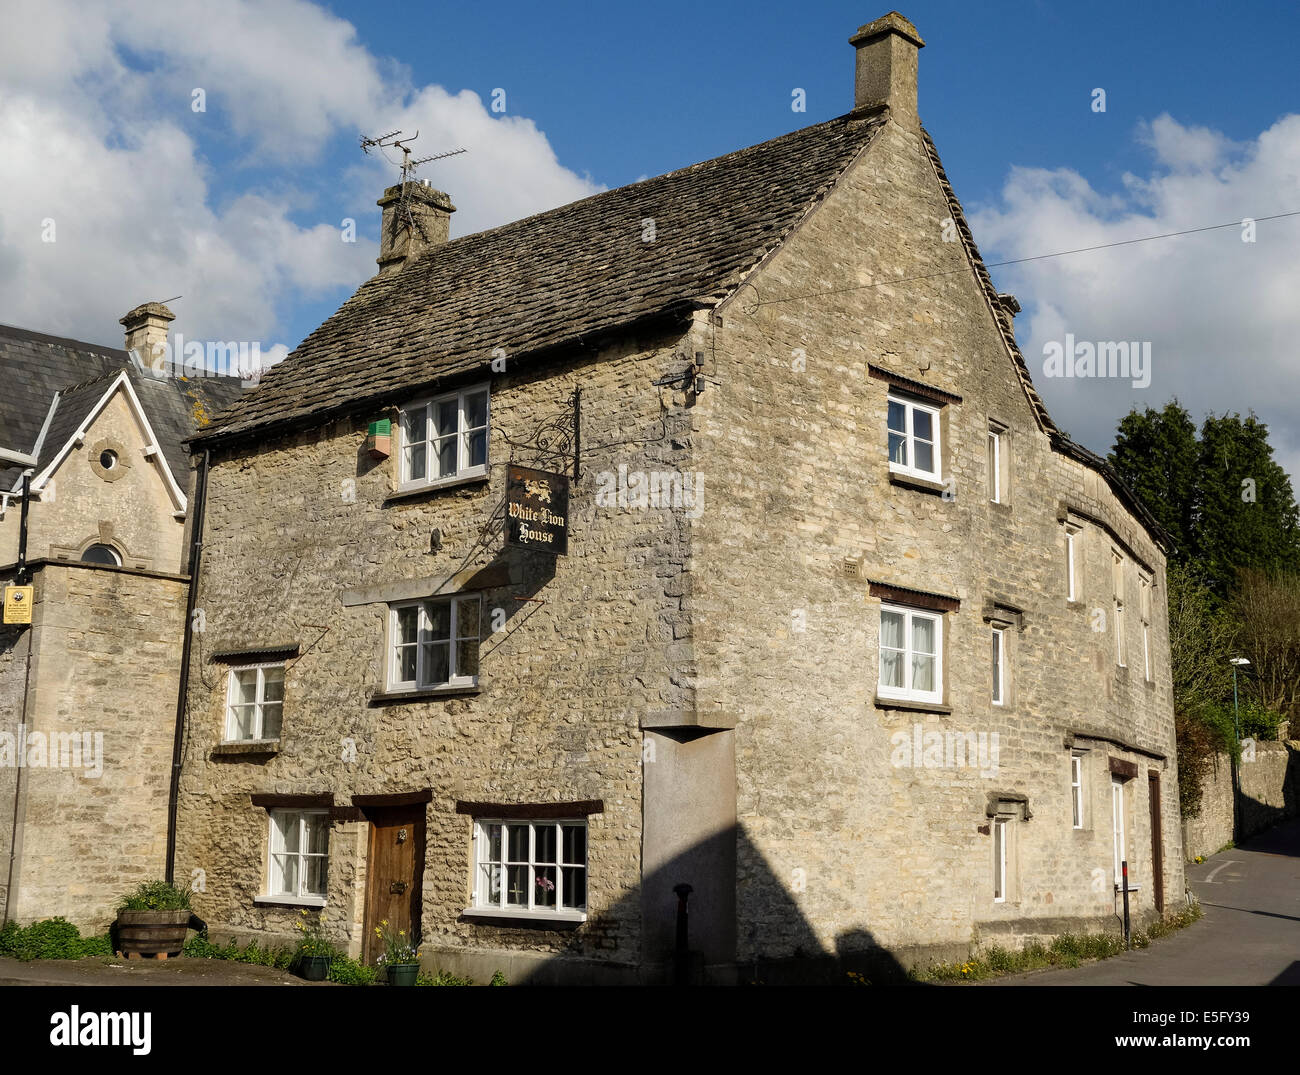 Grade 2 listed Cotswold stone buildings in Minchinhampton, Gloucestershire, UK Stock Photo